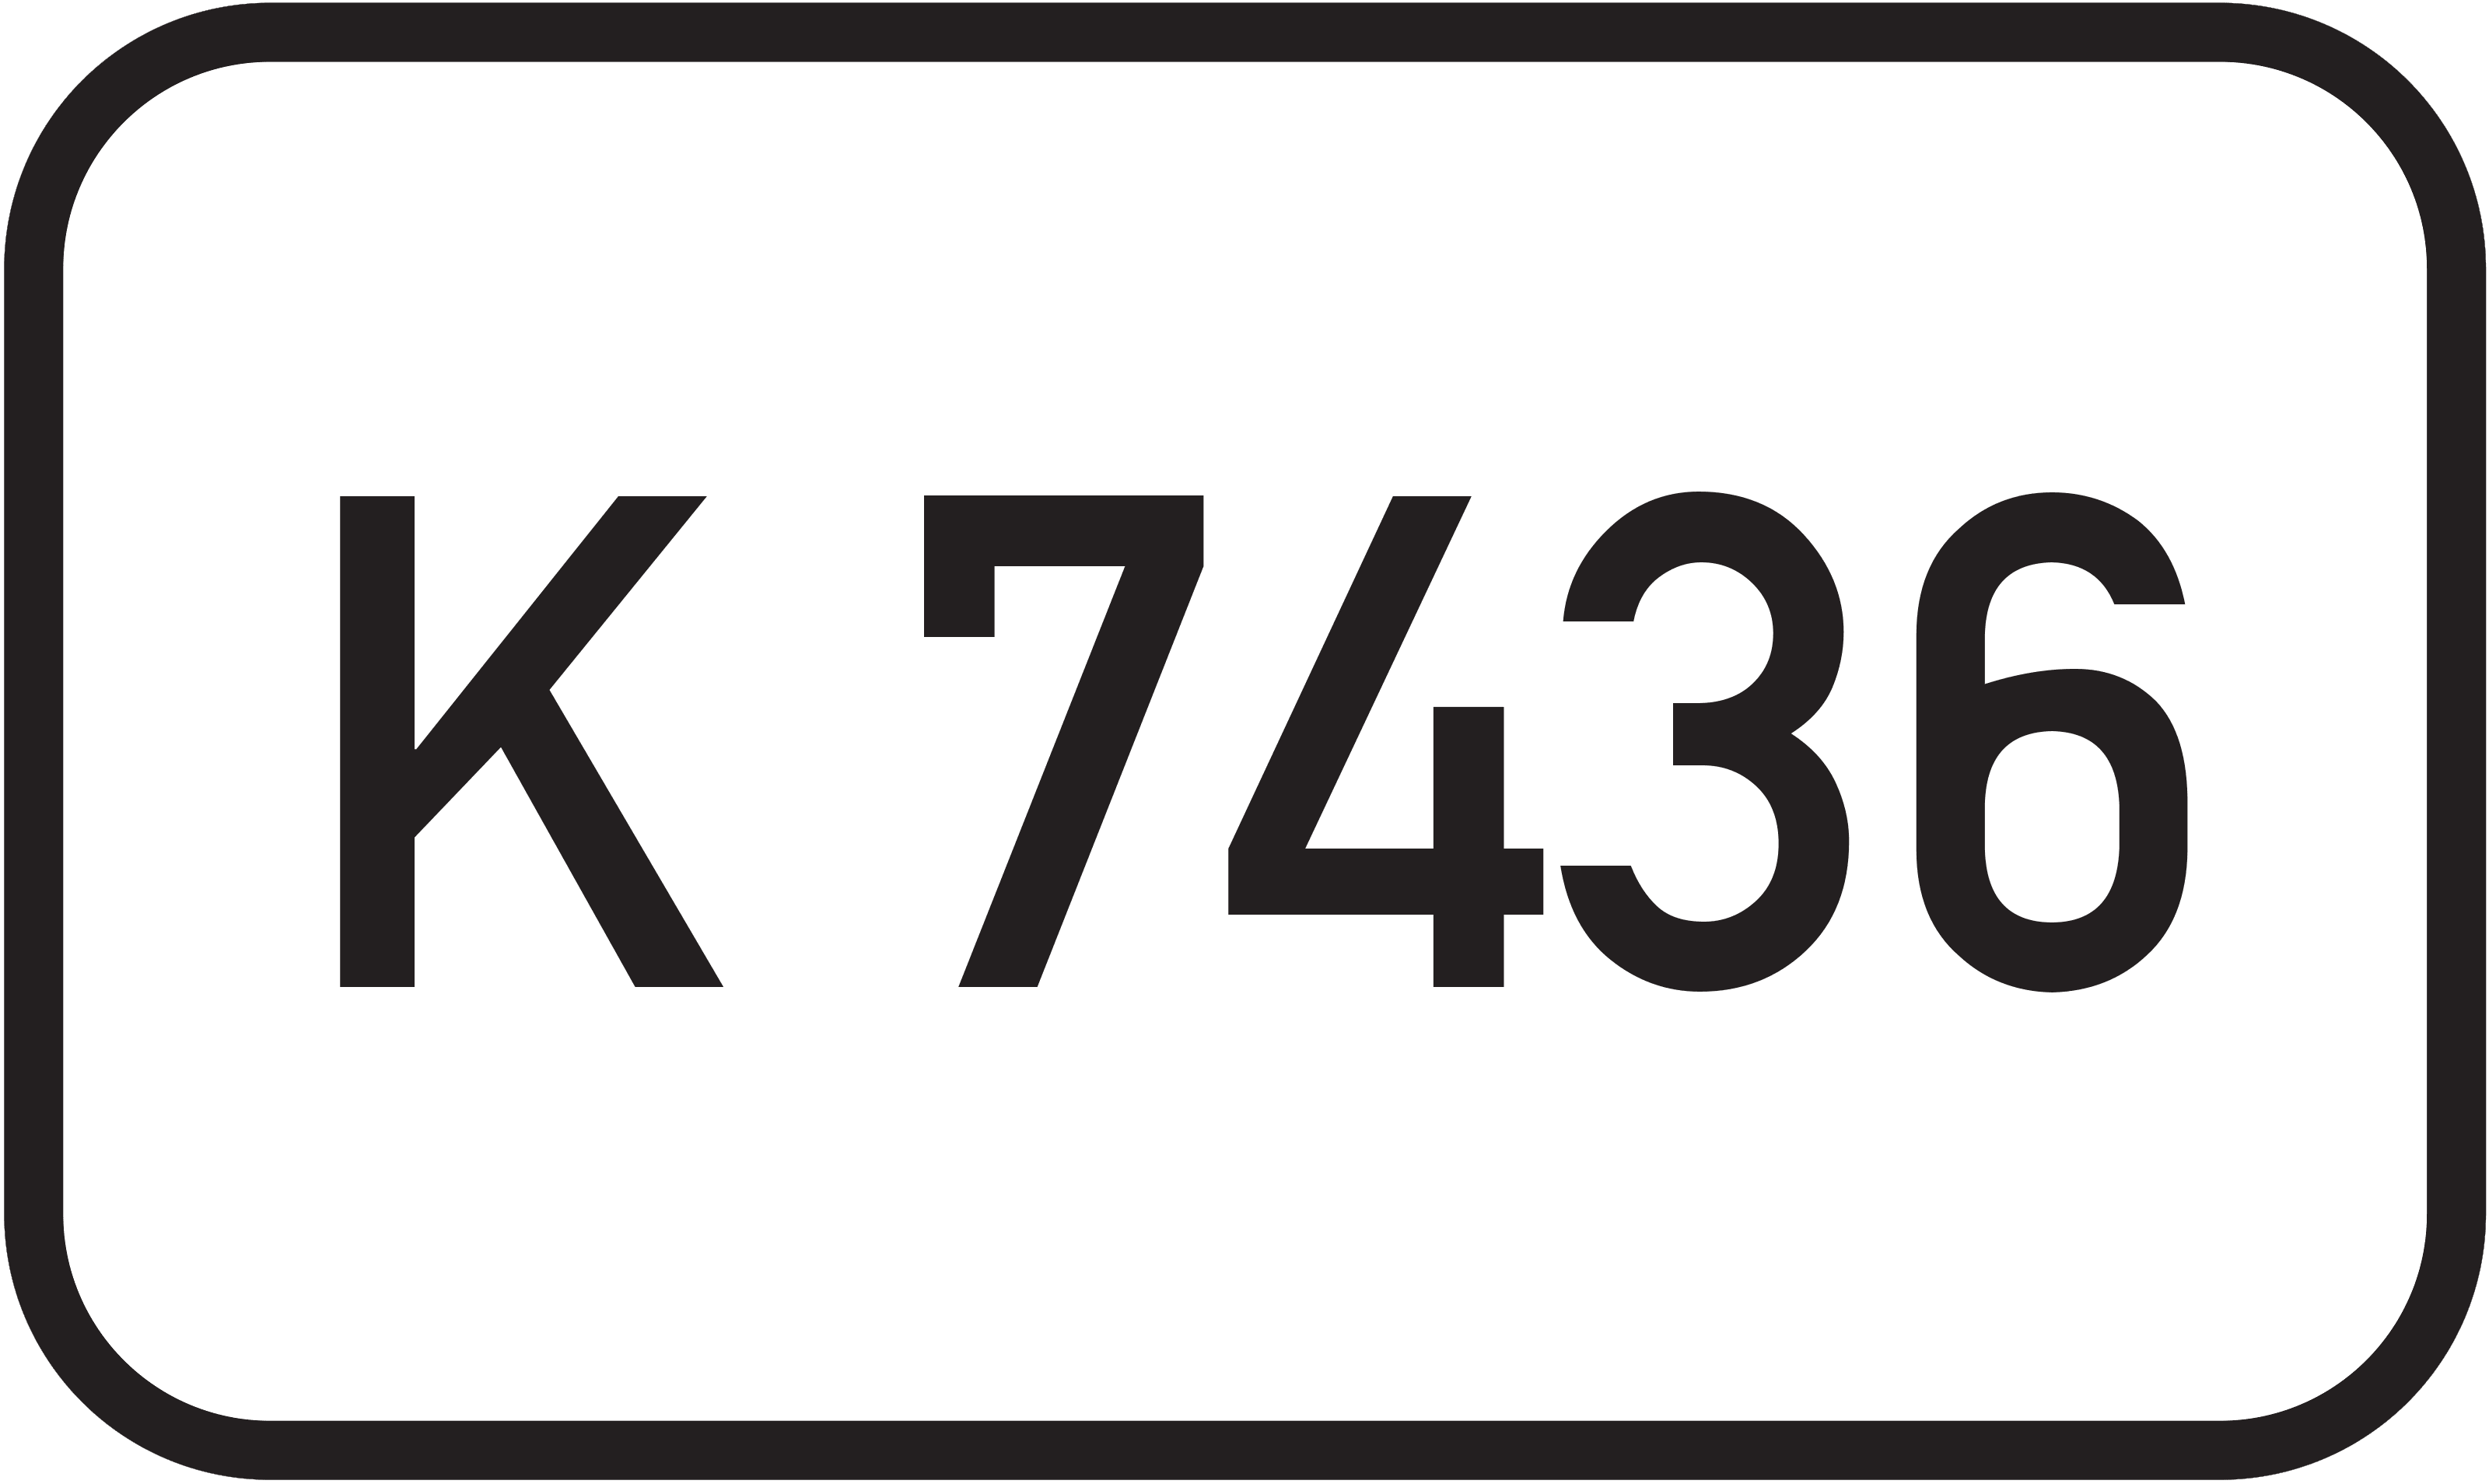 Straßenschild Kreisstraße K 7436